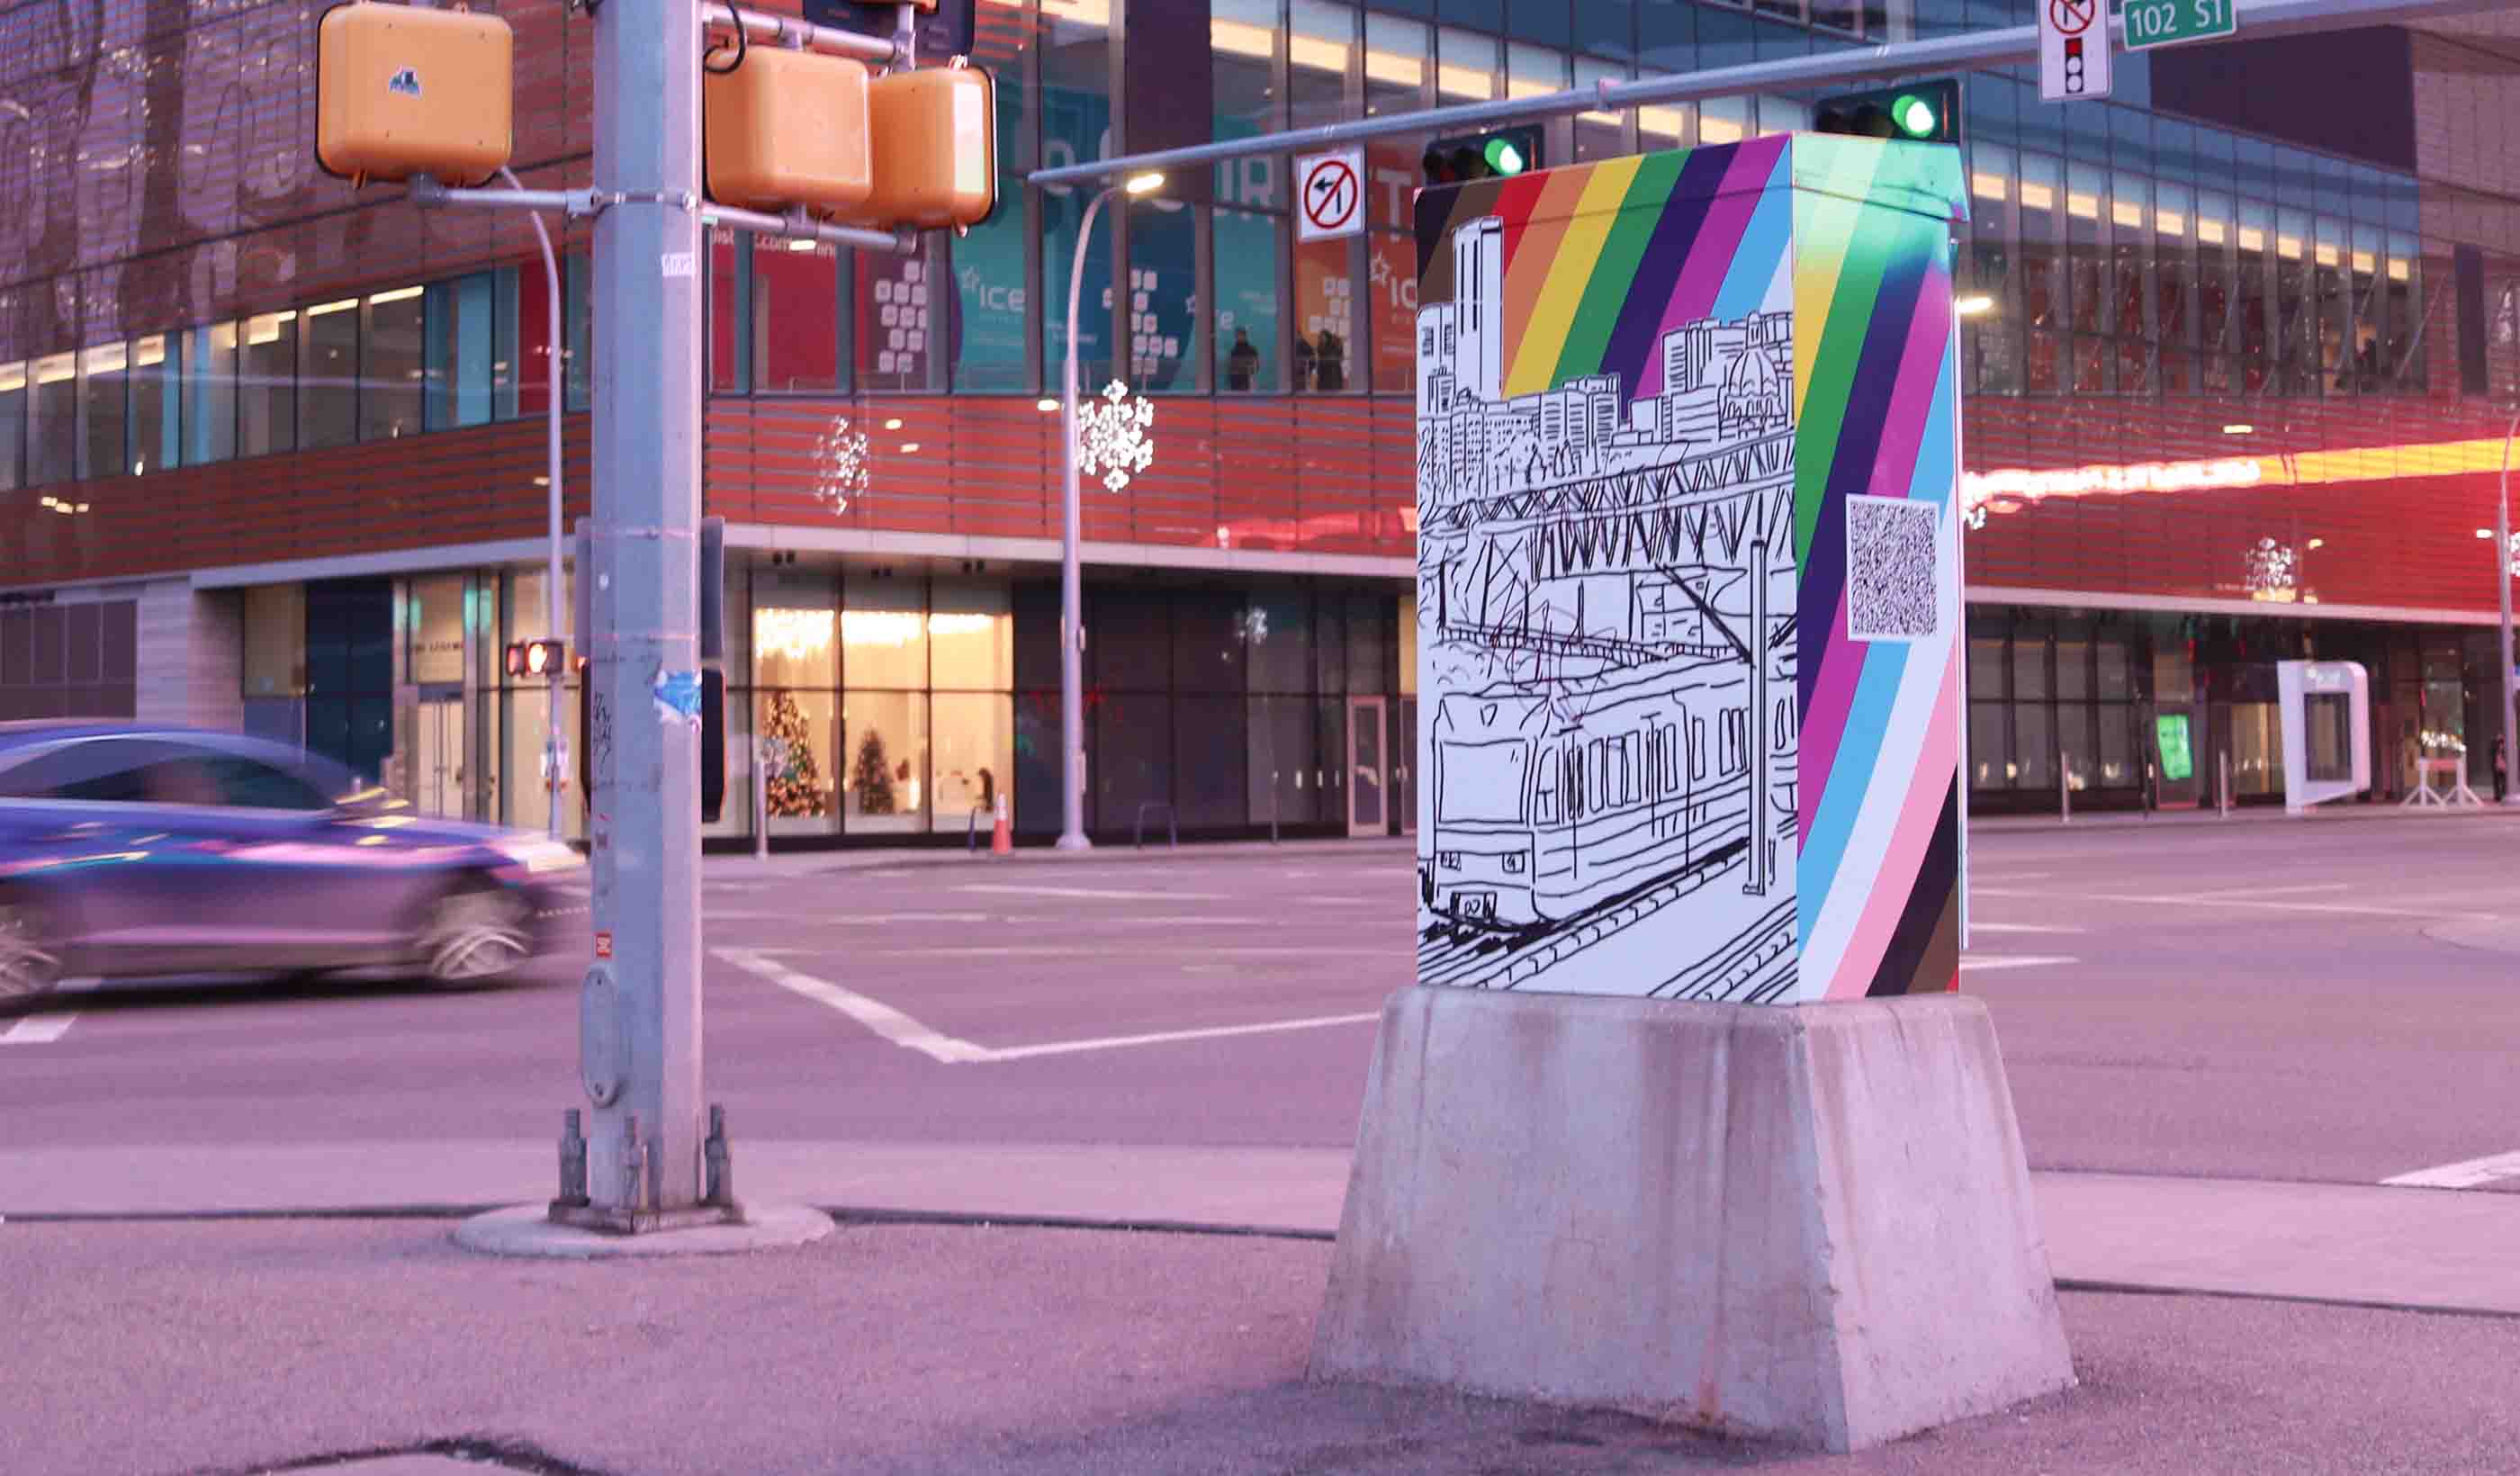 Edmonton traffic control box murals